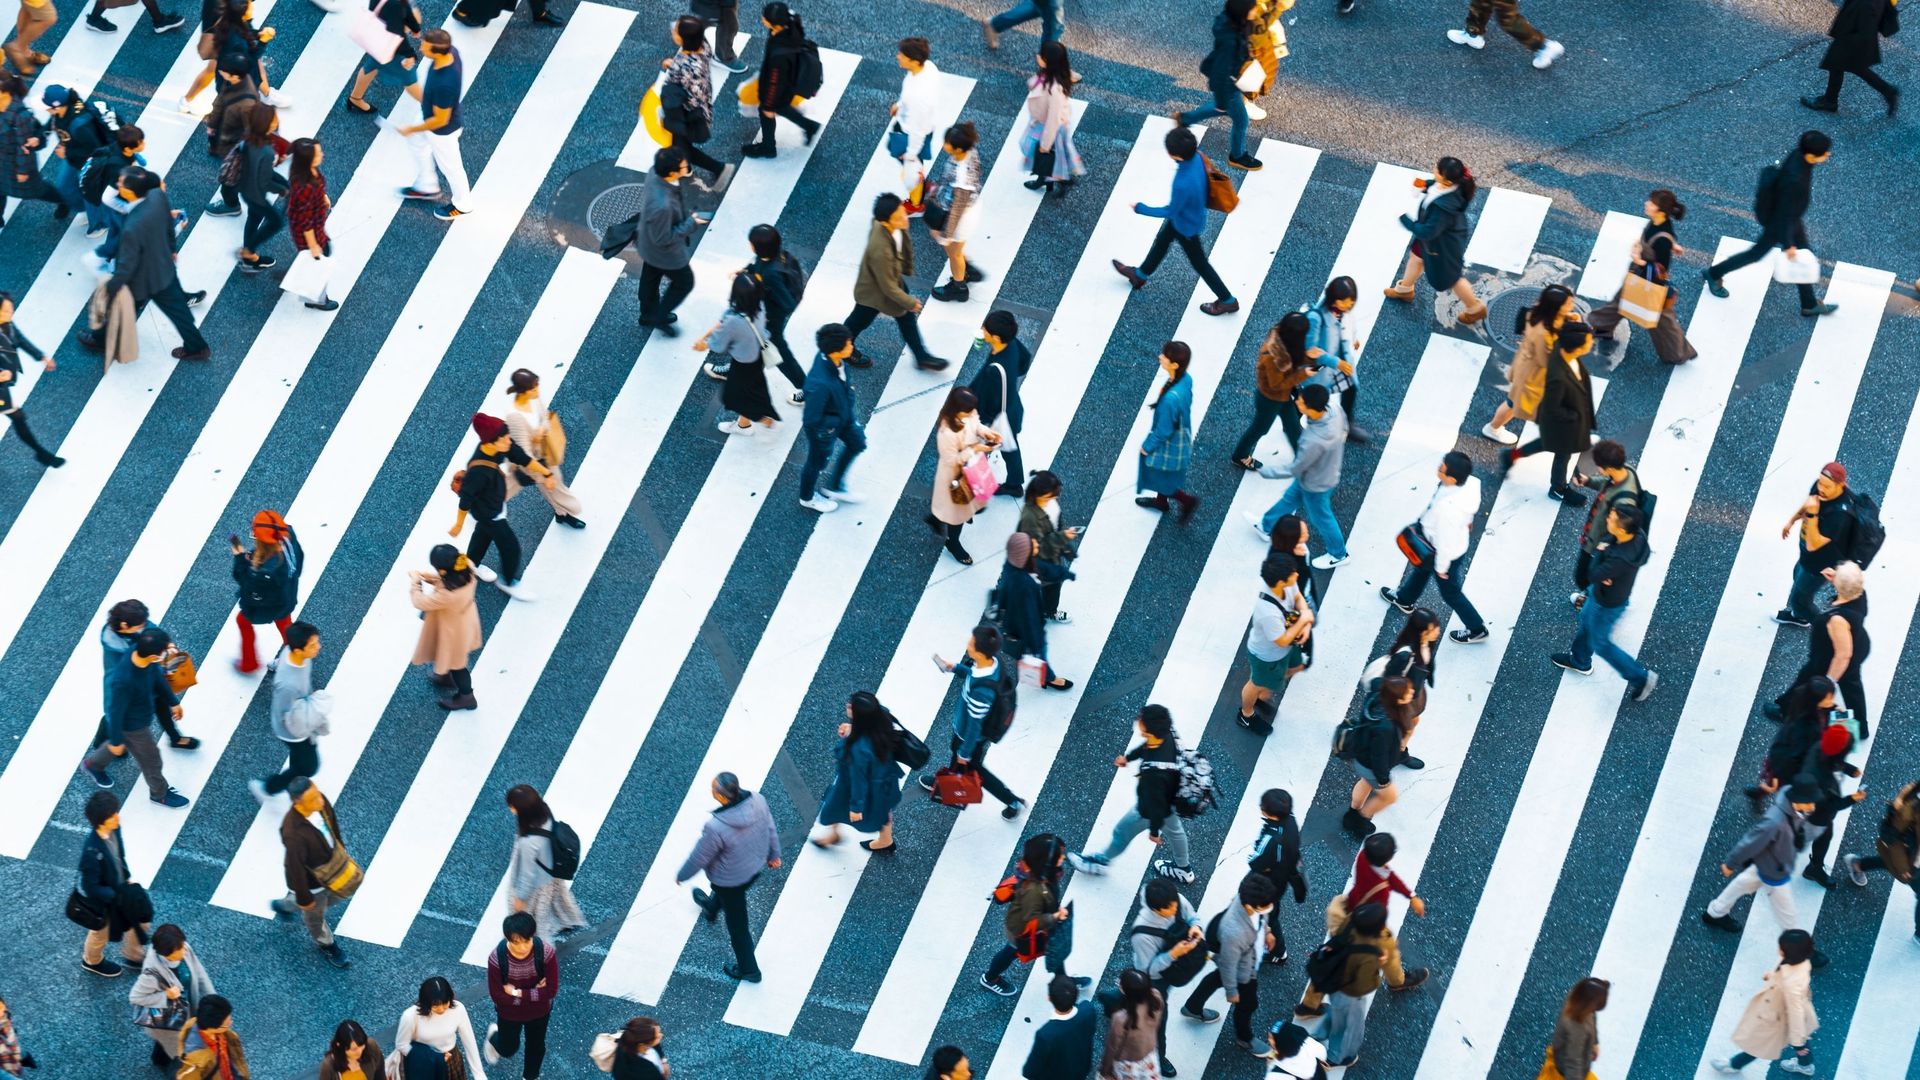 People walking at Shibuya crossing, Tokyo